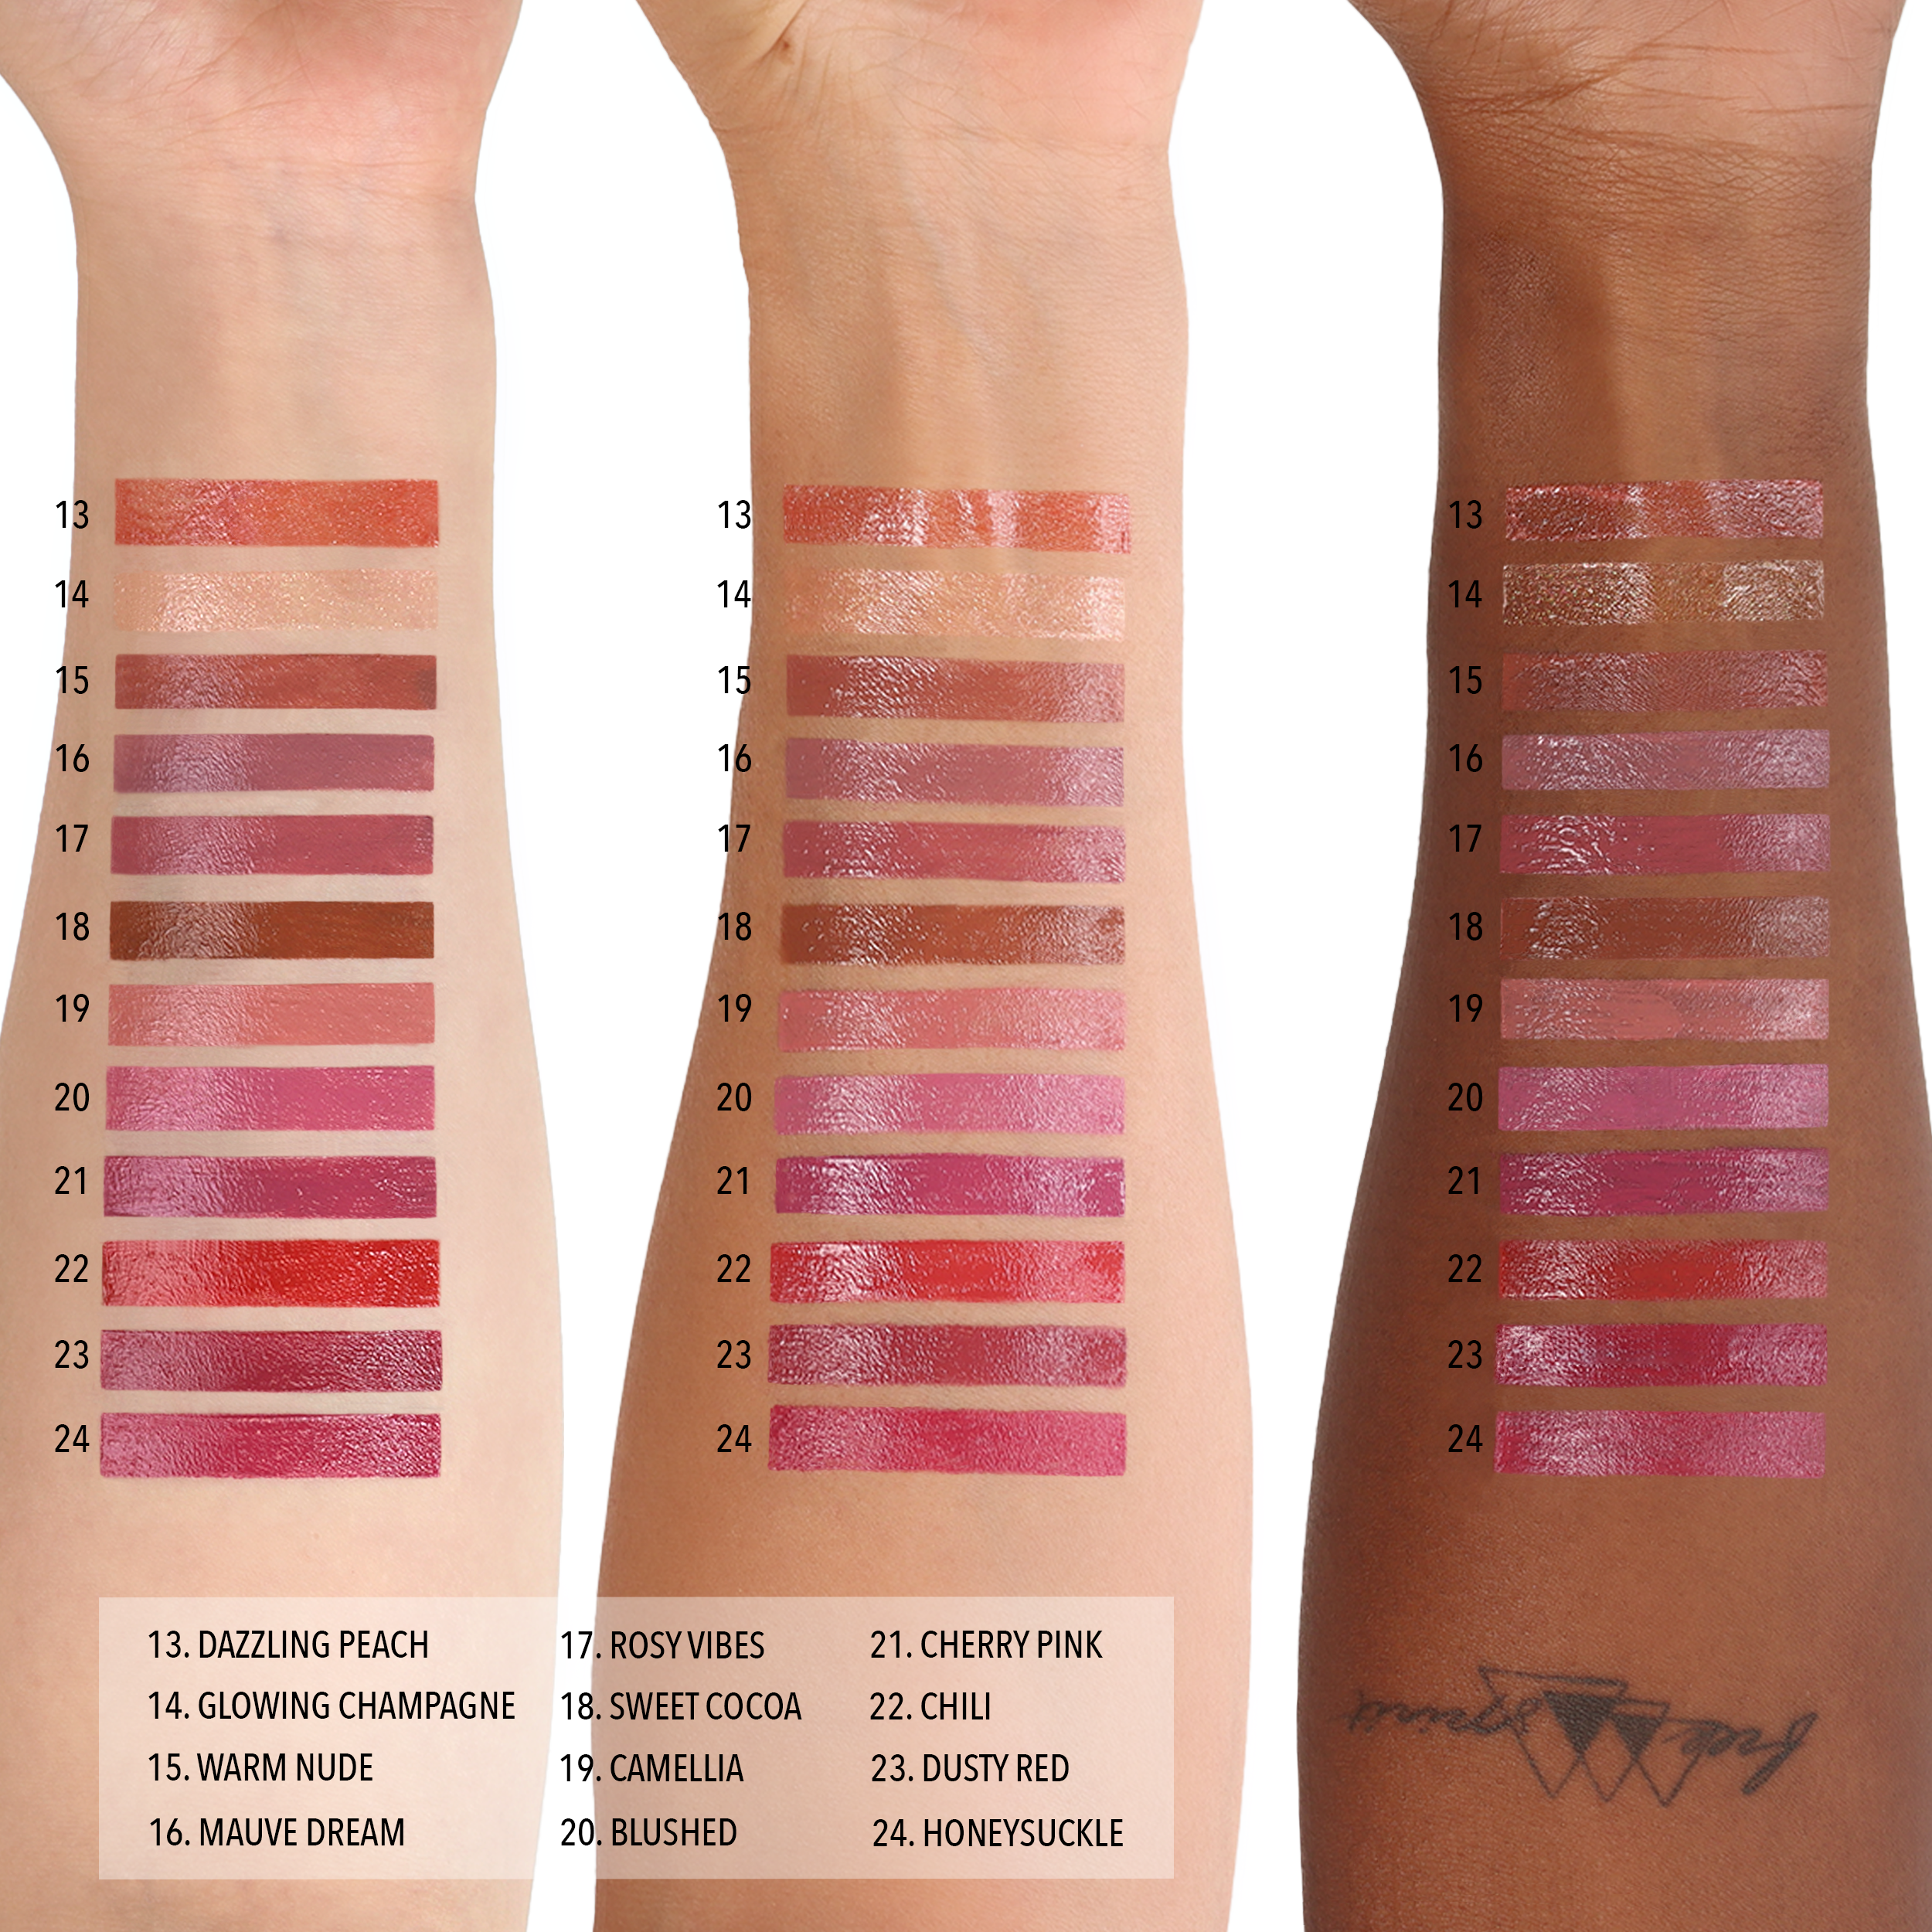 Signature Lipstick (017, Rosy Vibes)